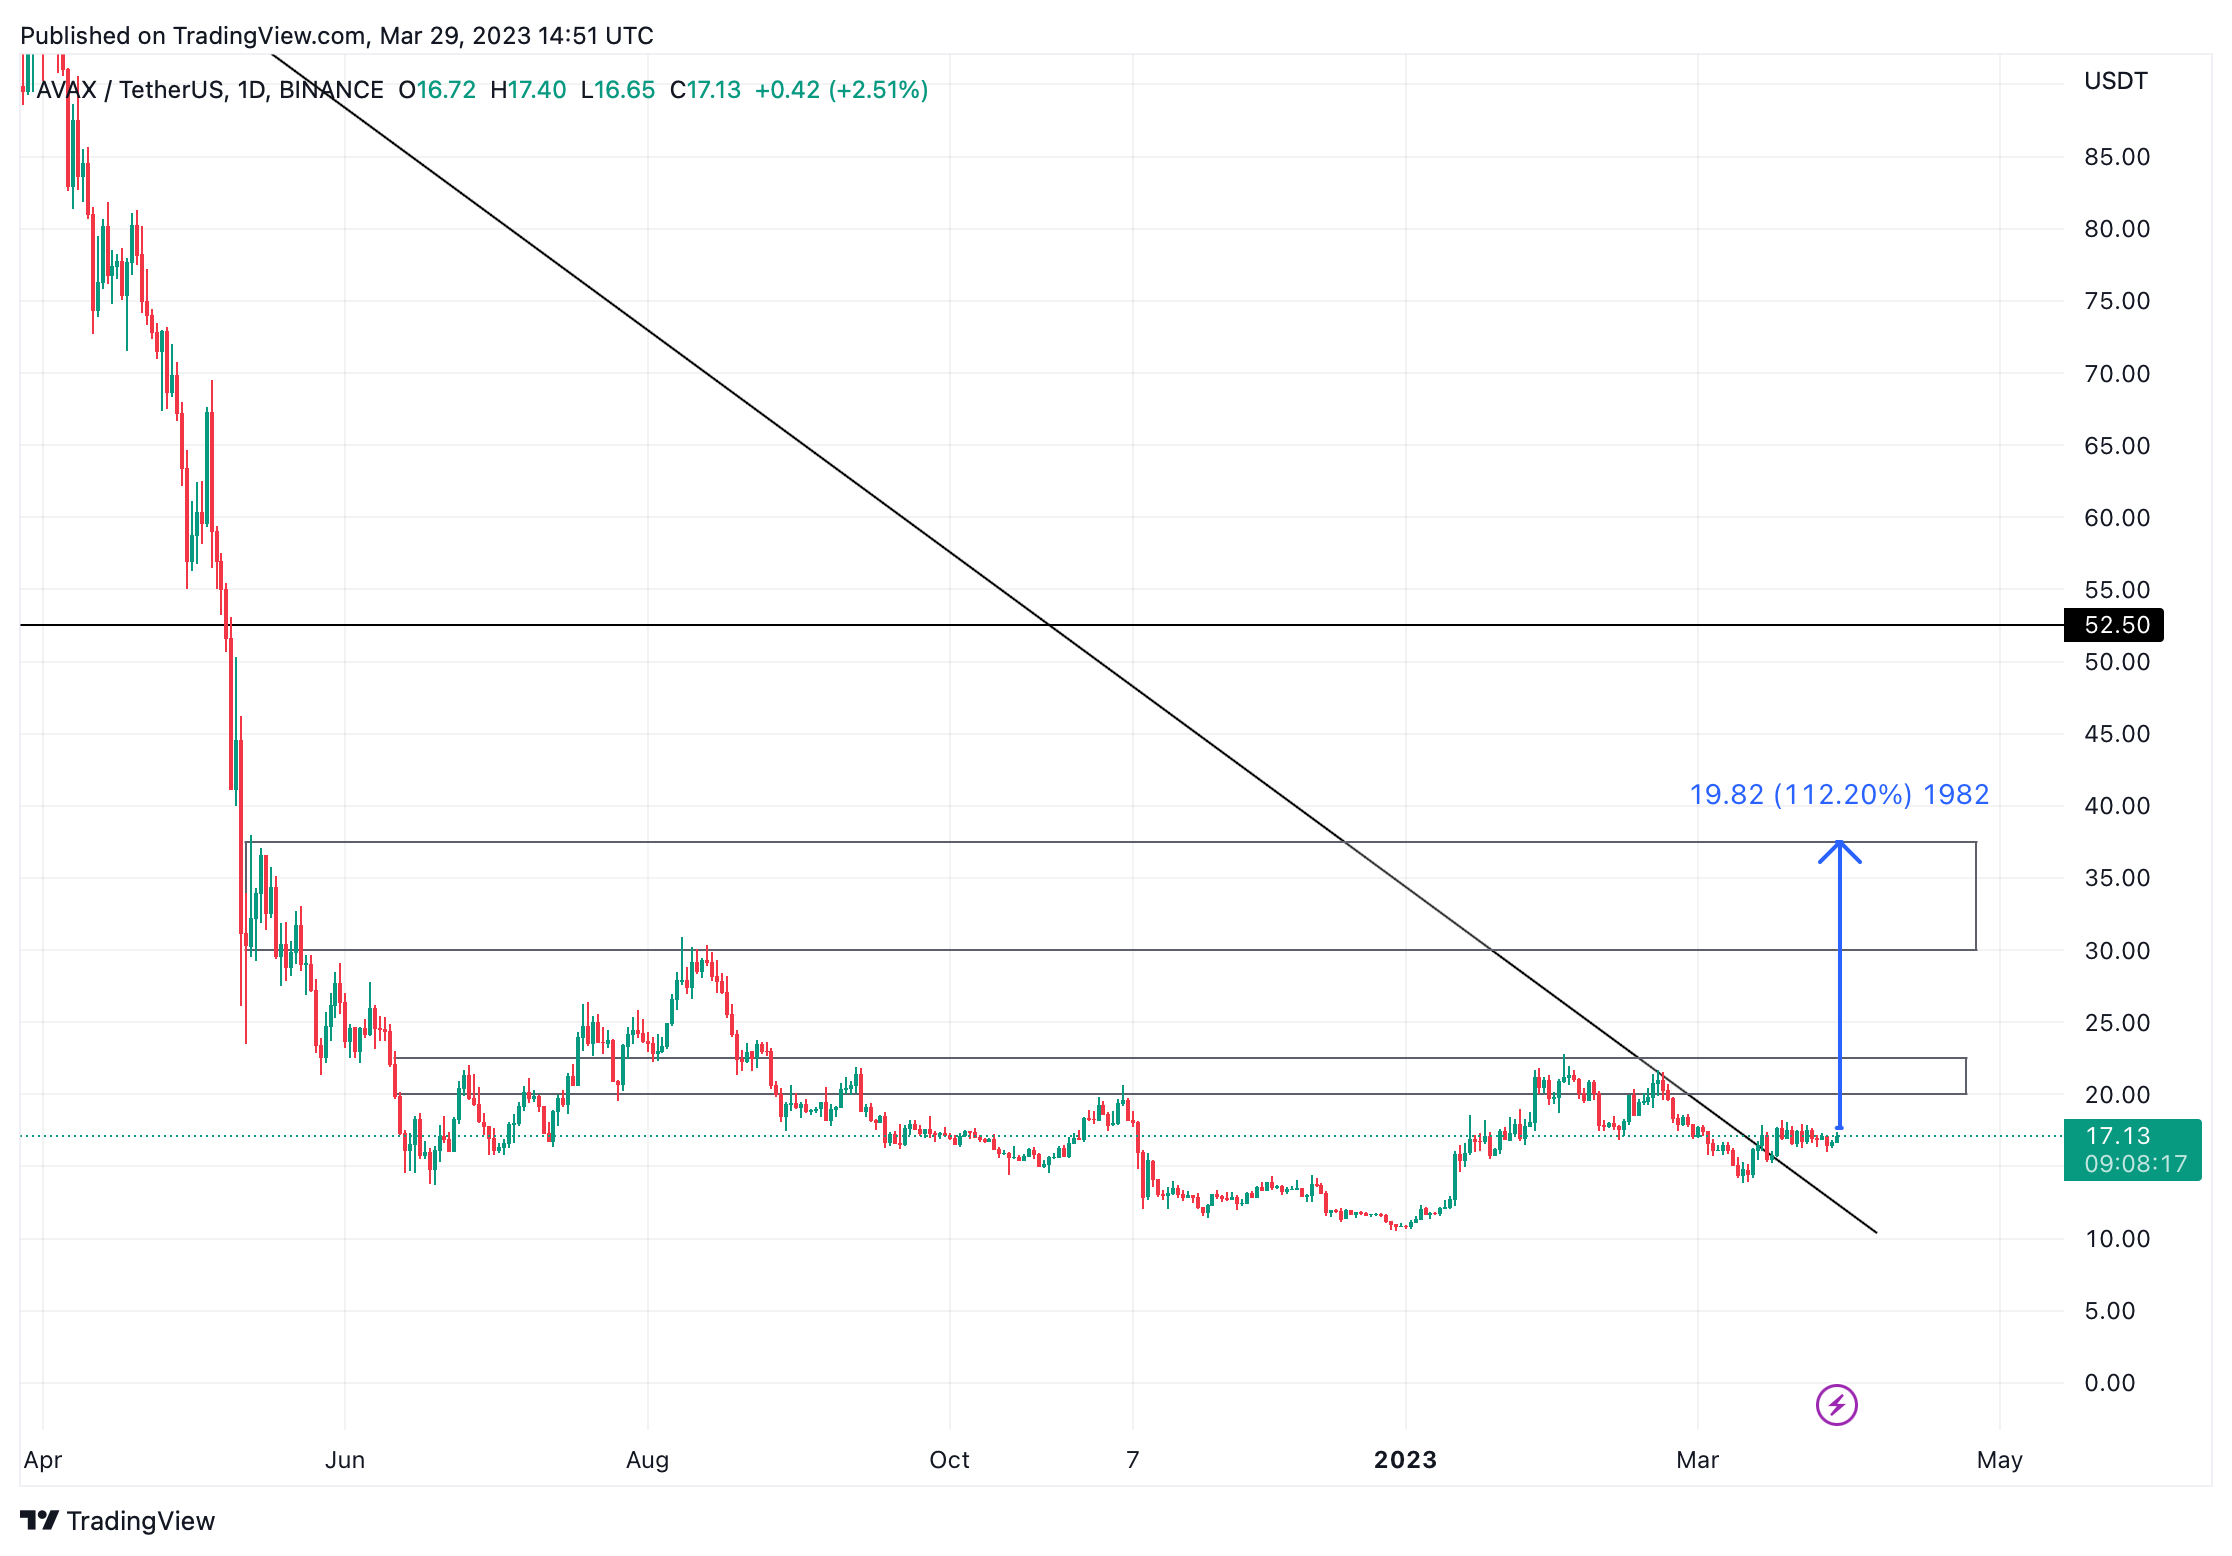 AVAX/USDT 1D price chart